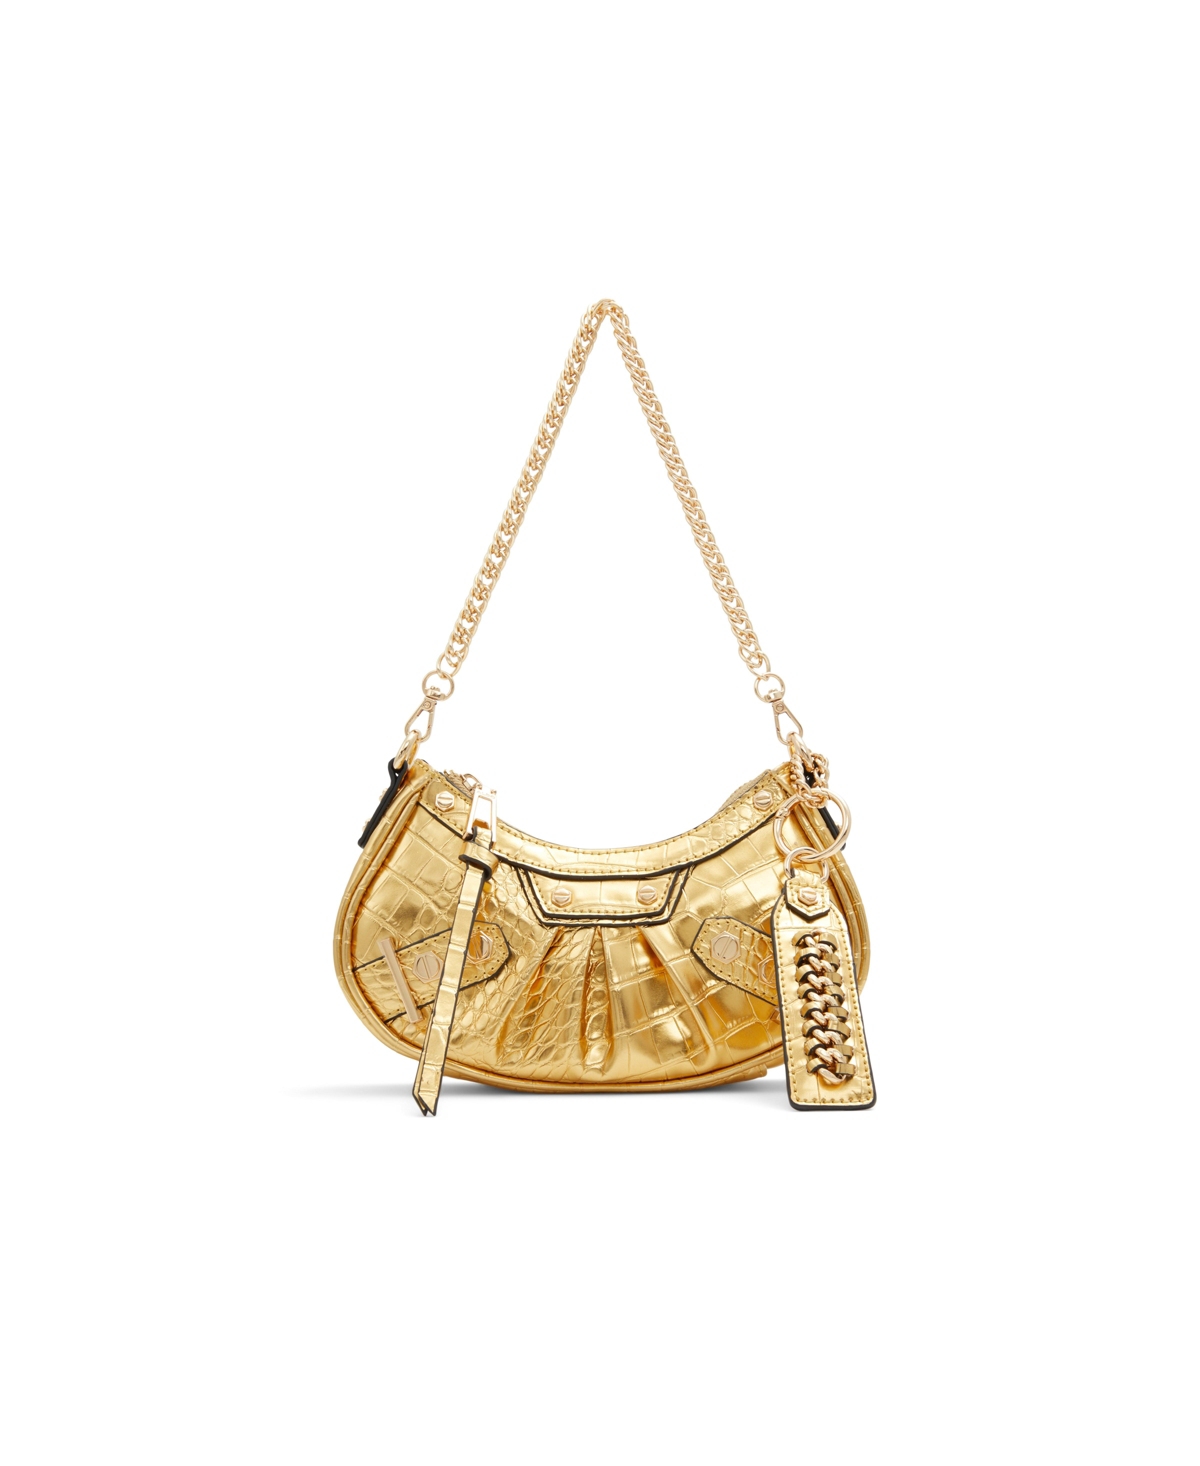 Fraydax Women's City Handbags - Gold